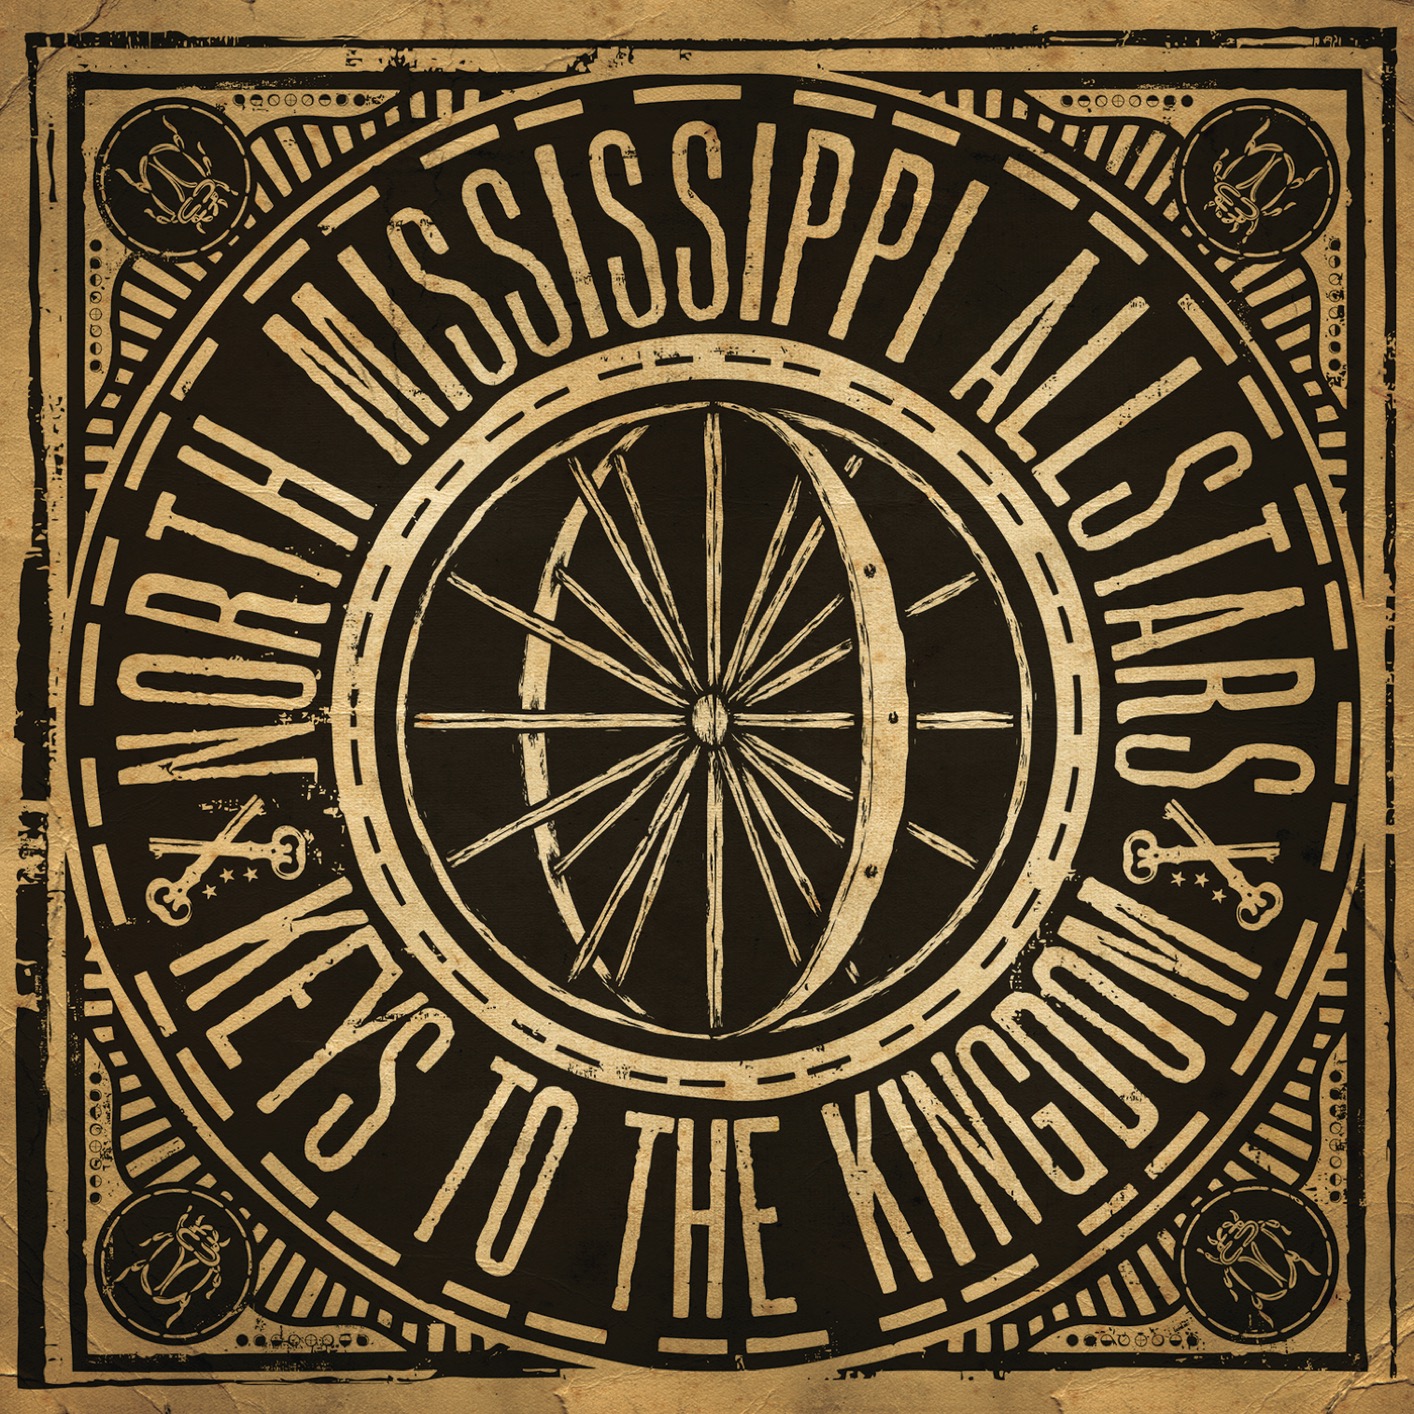 North Mississippi Allstars - Keys to the Kingdom (2011/2017) [FLAC 24bit/44,1kHz]